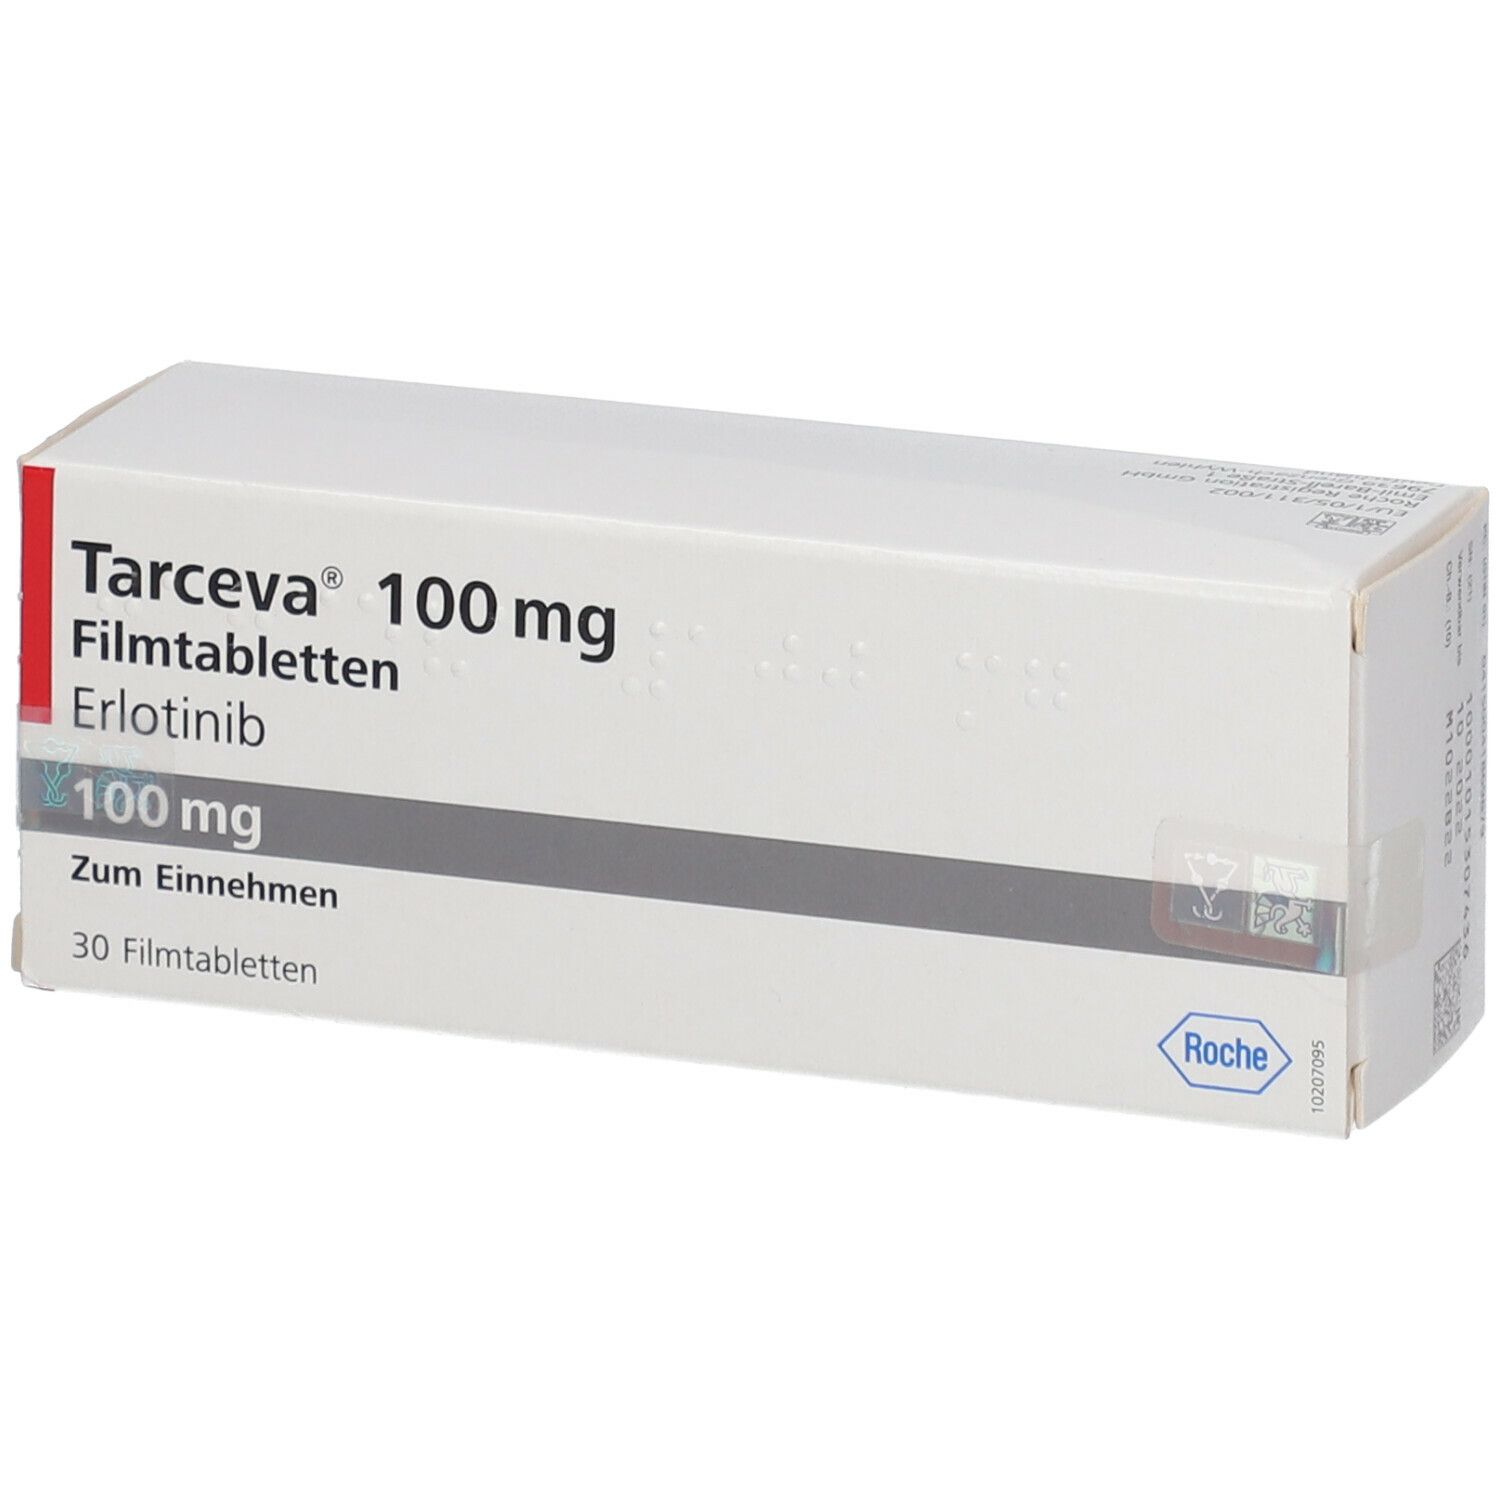 Buy Tarceva erlotinib 100mg film-coated tablet 1's online with MedsGo ...